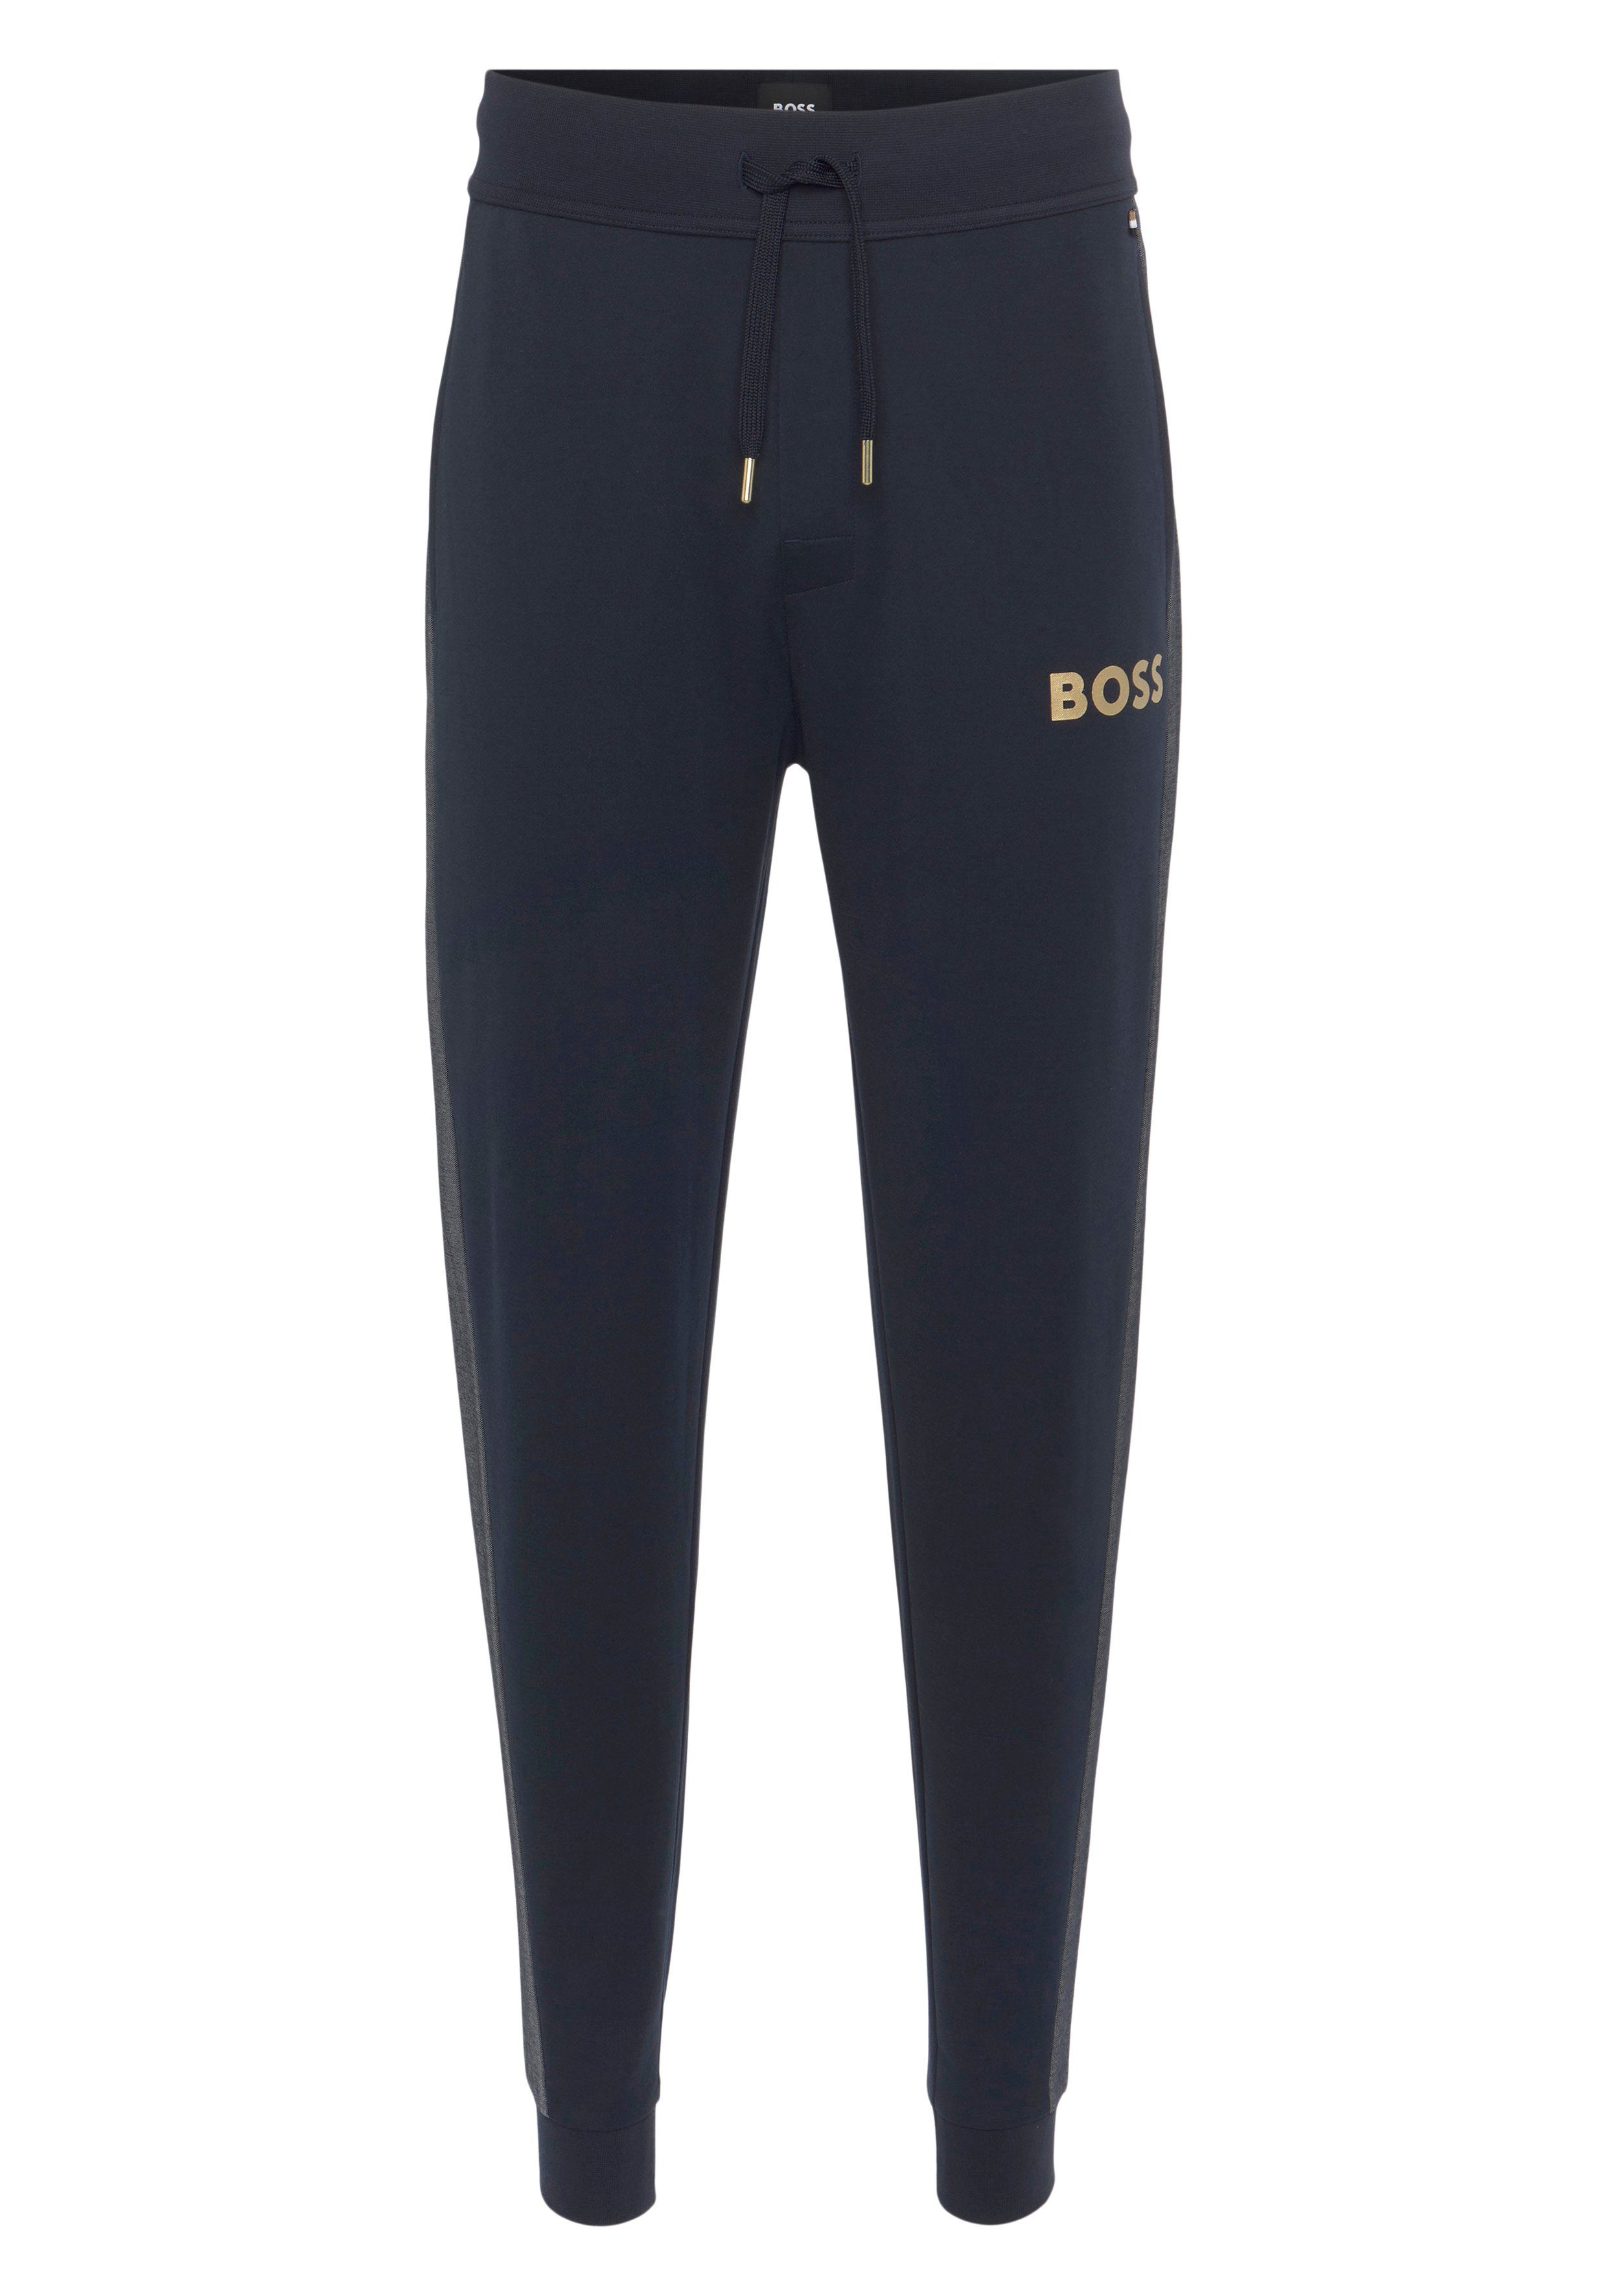 BOSS Homewearhose Tracksuit Pants 10166548 22 mit kontrastfarbenem Seitenstreifen Dark-Blue